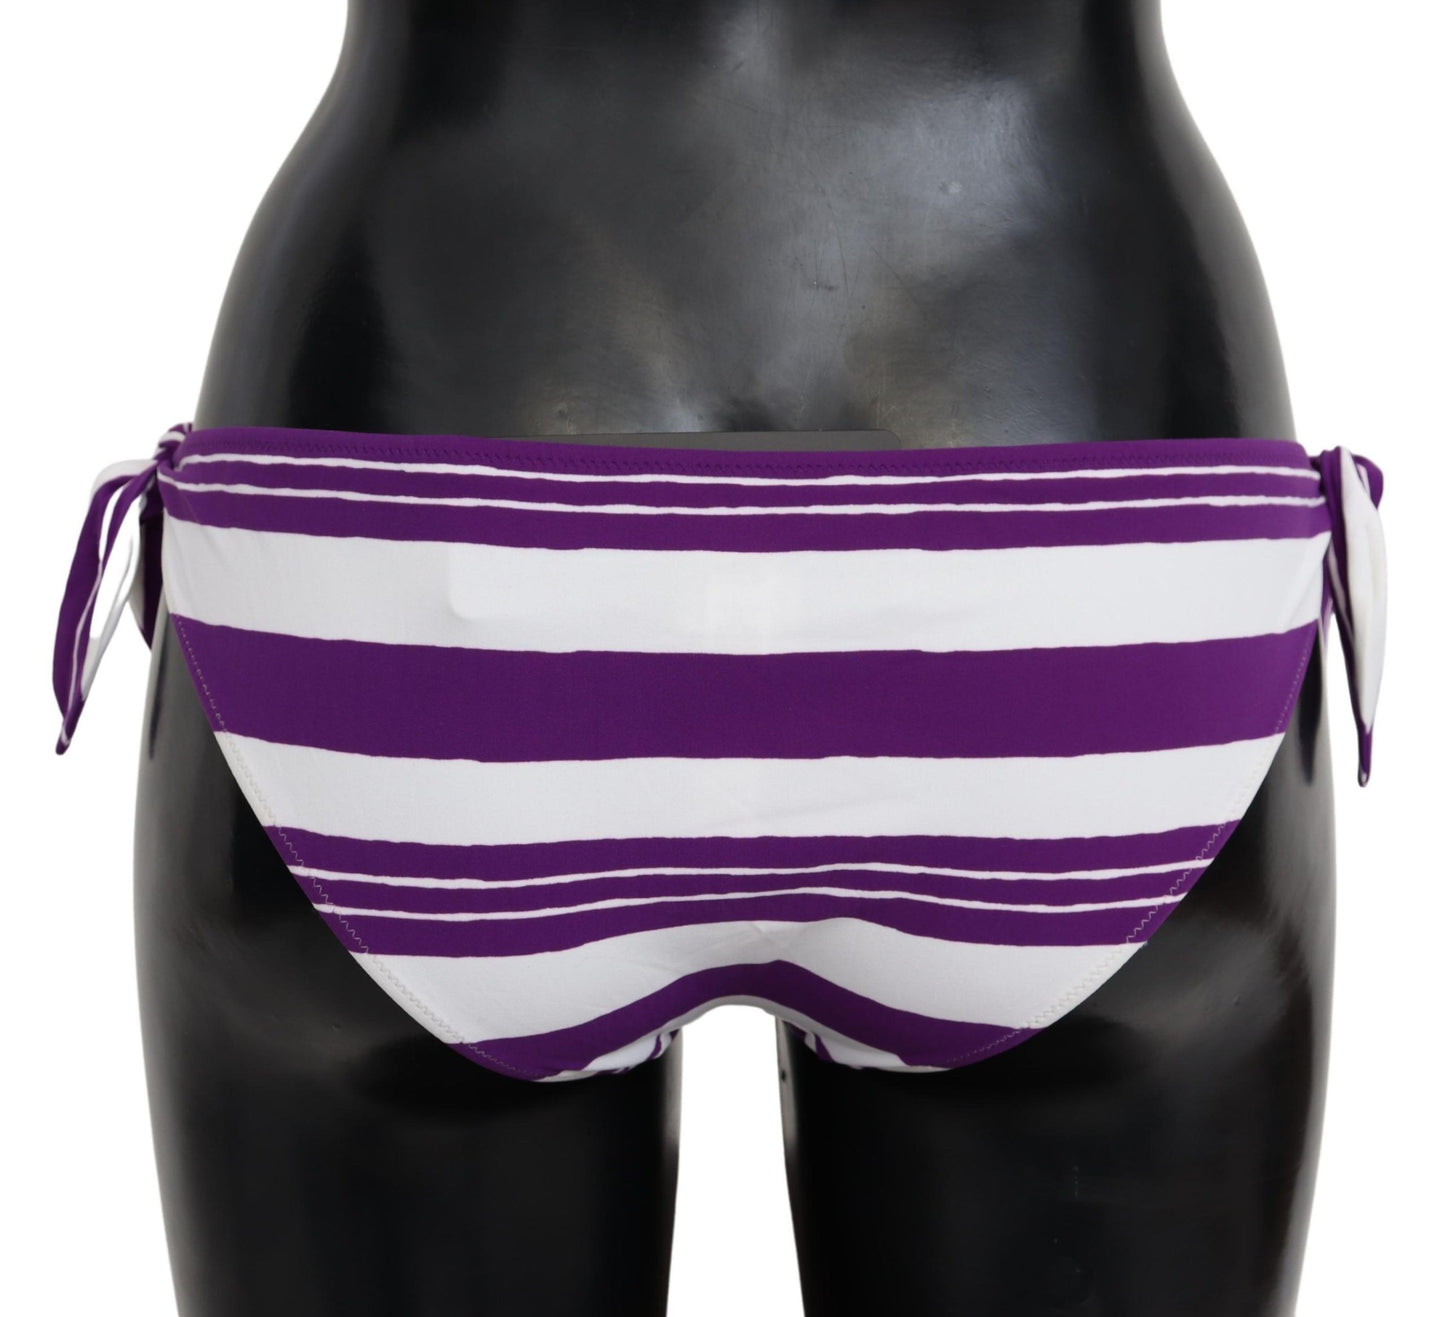 Dolce & Gabbana Chic Striped Bikini Bottom - Effortless Poolside Glamour